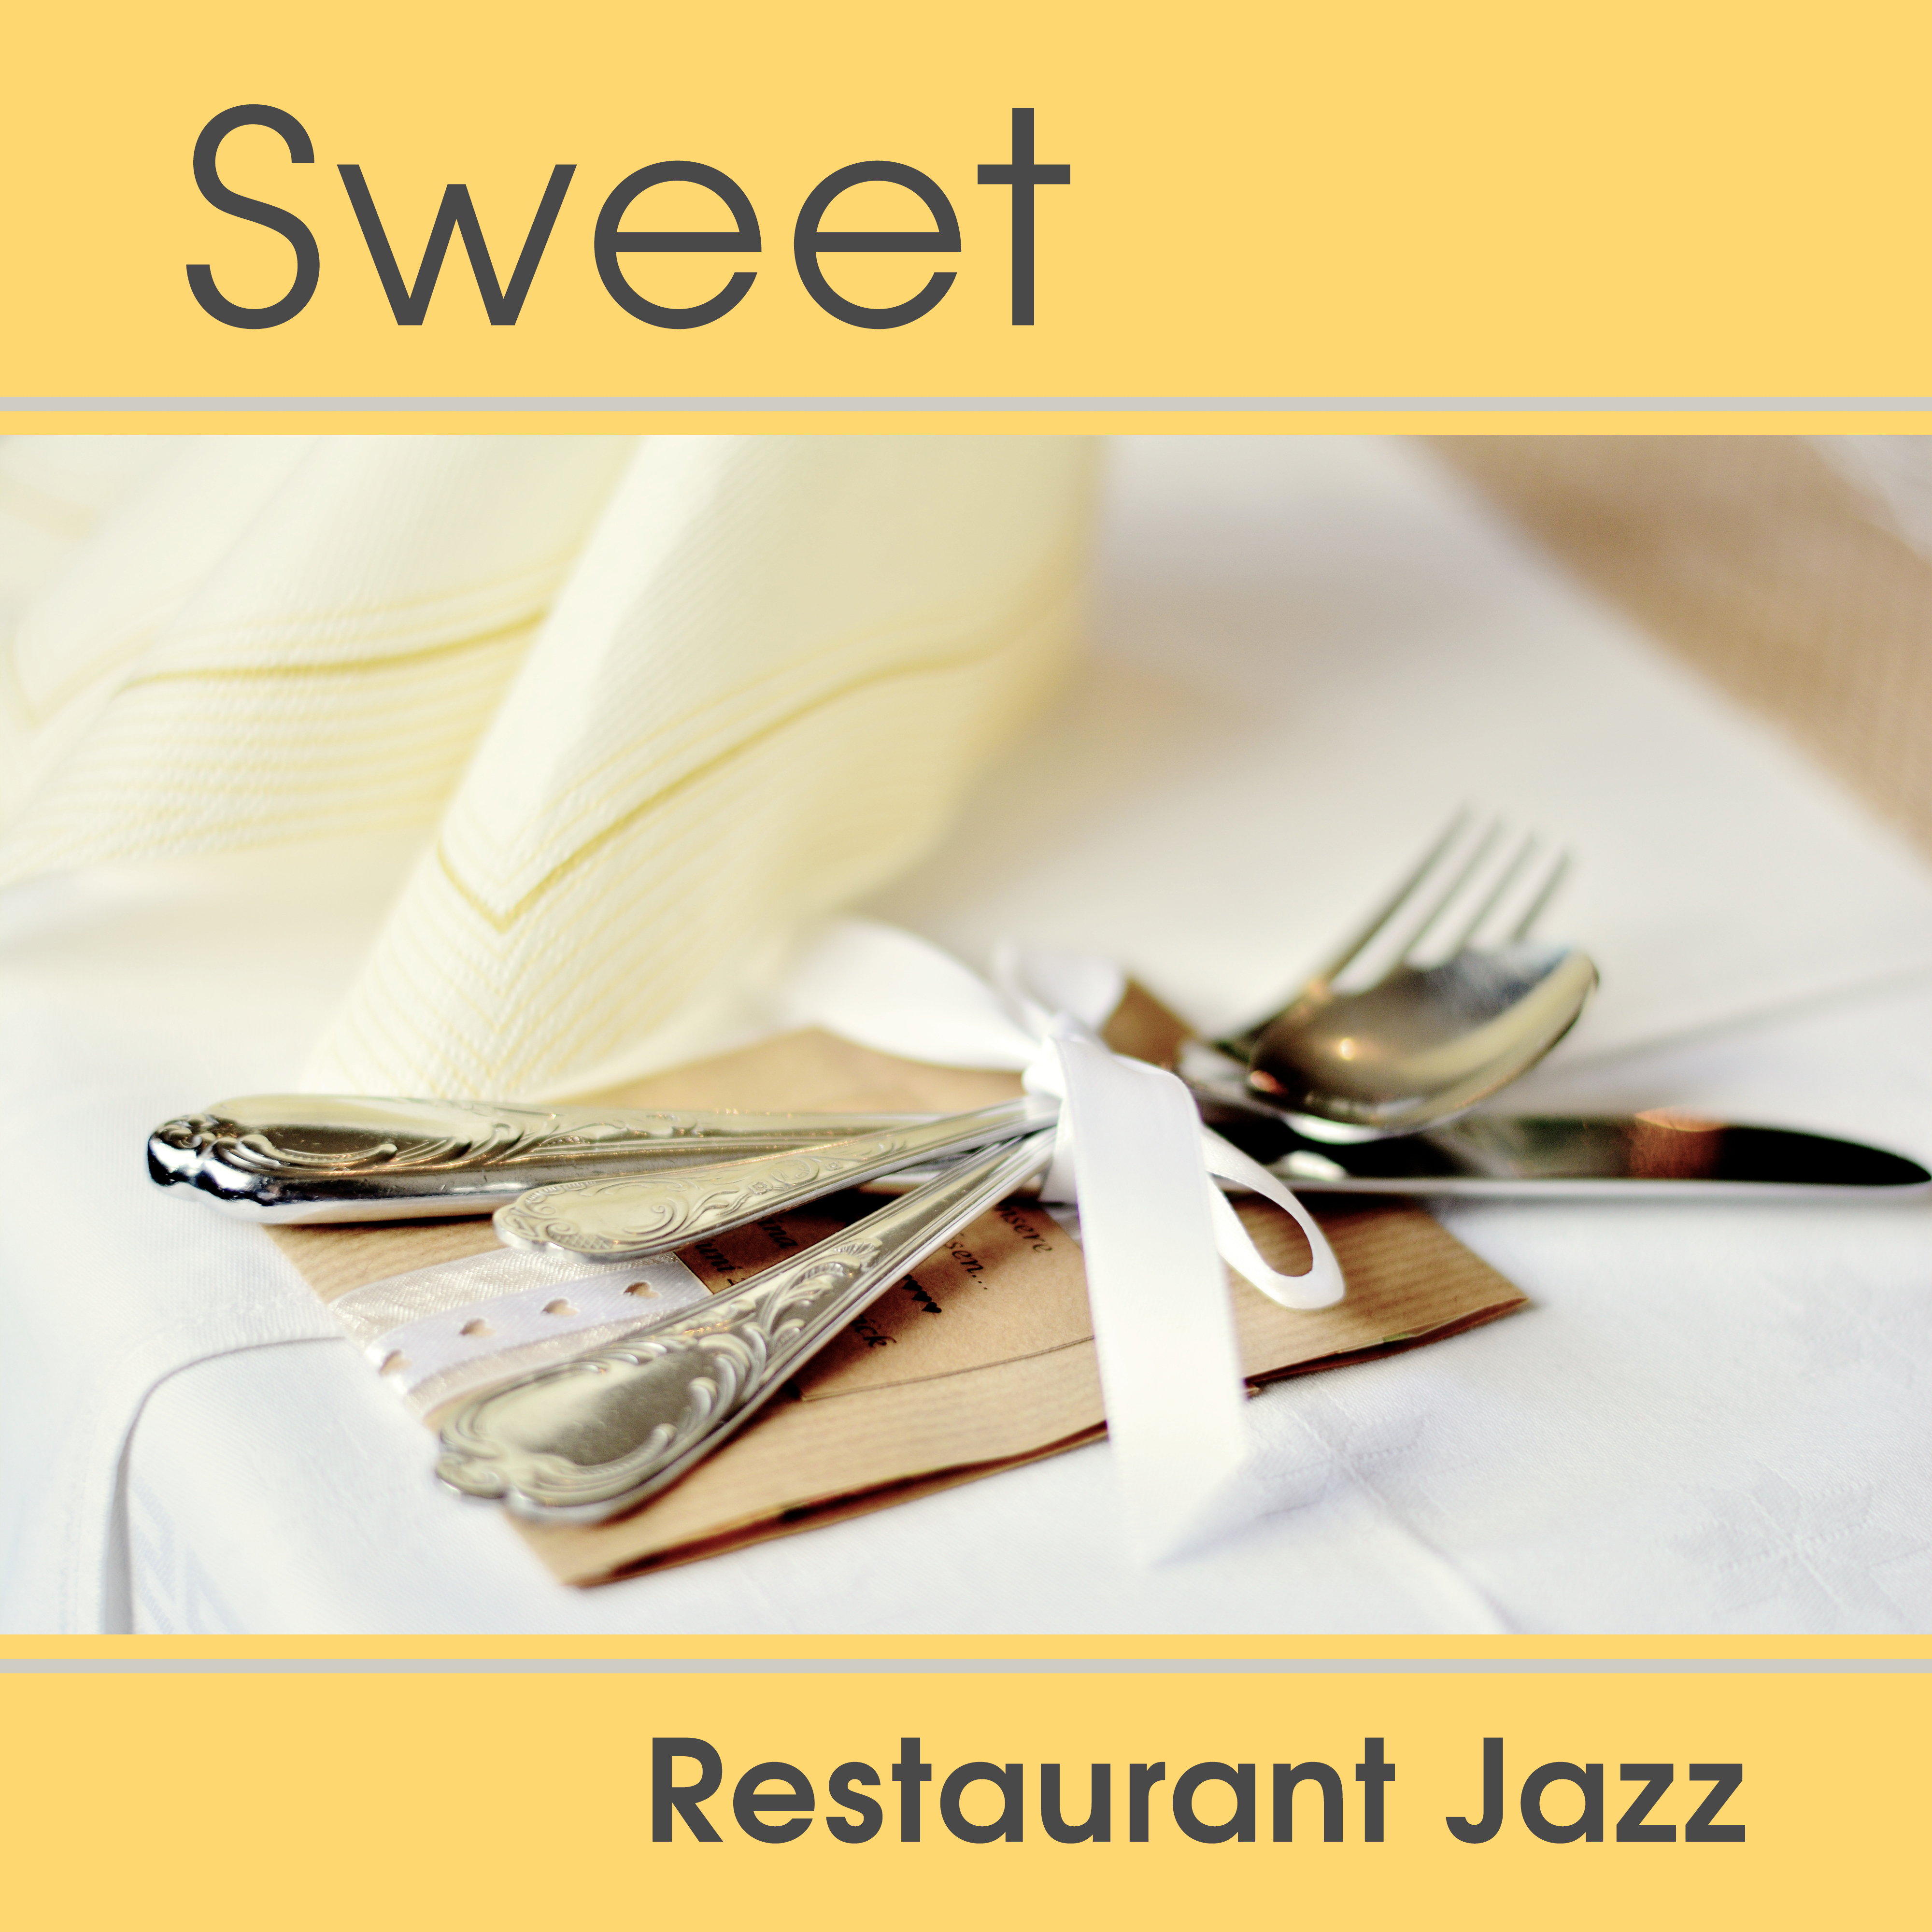 Sweet Restaurant Jazz  Calming Jazz Music, Best Background Sounds for Restaurant, Relaxing Melodies